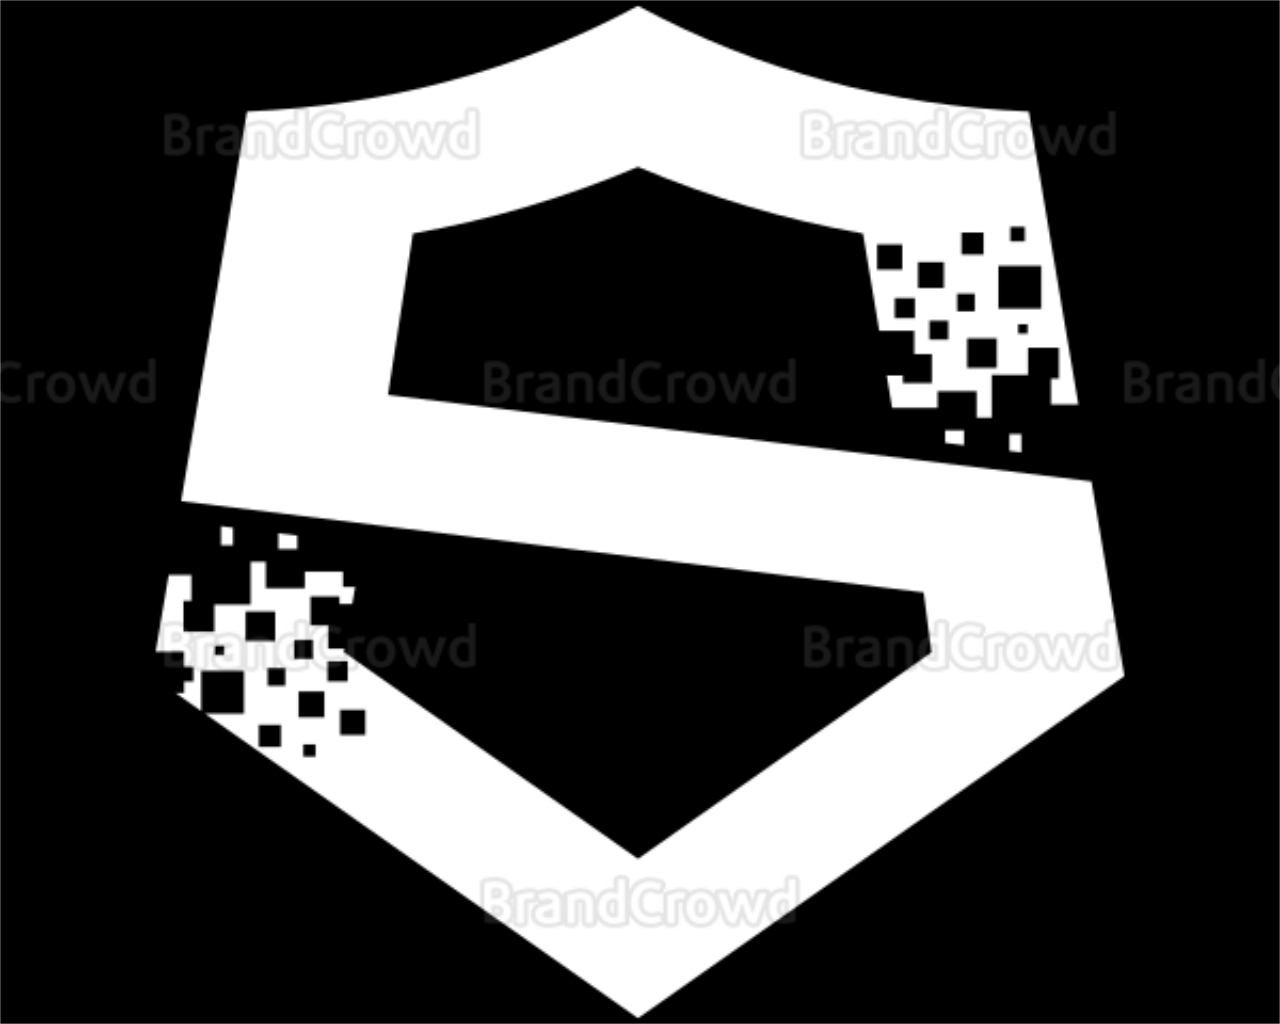 My BrandPage's logo